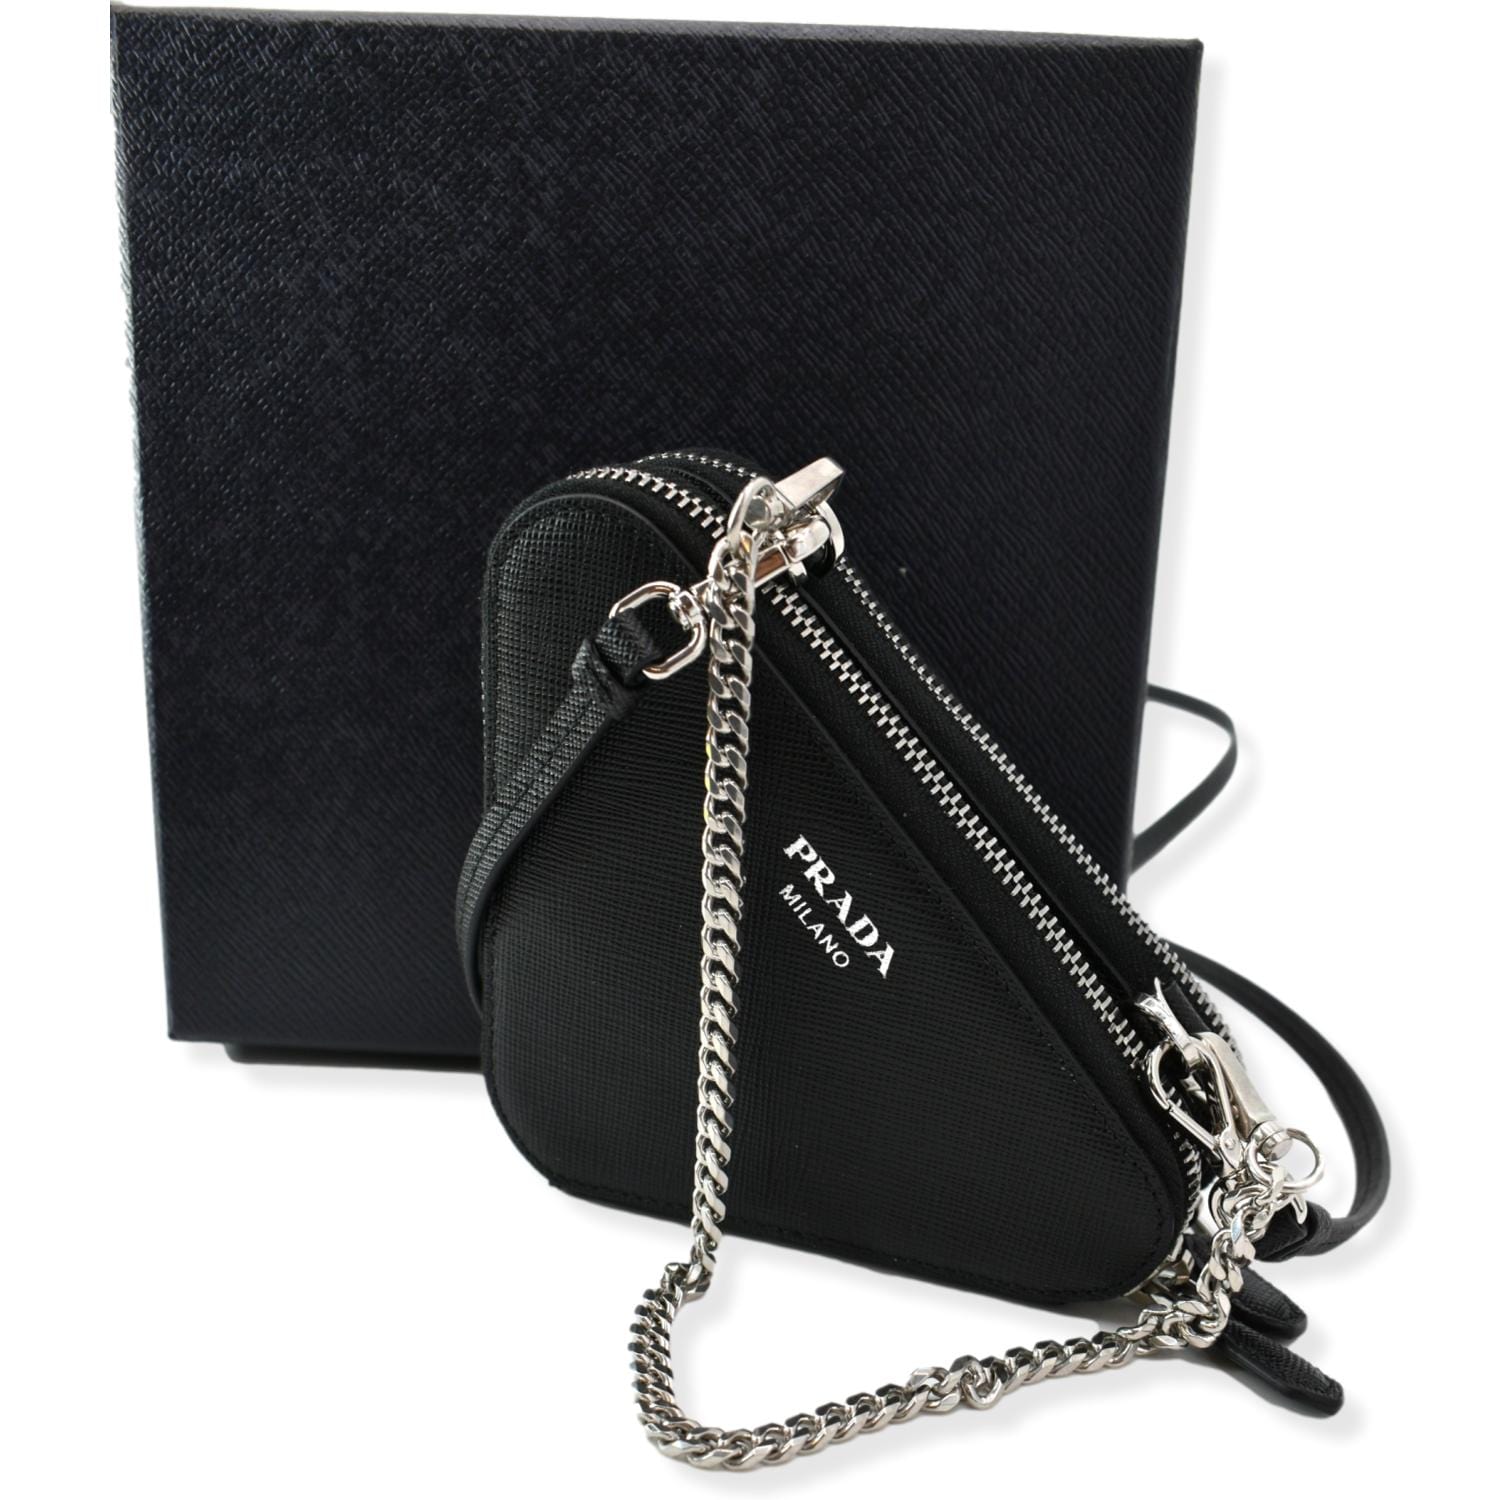 Saffiano leather pouch